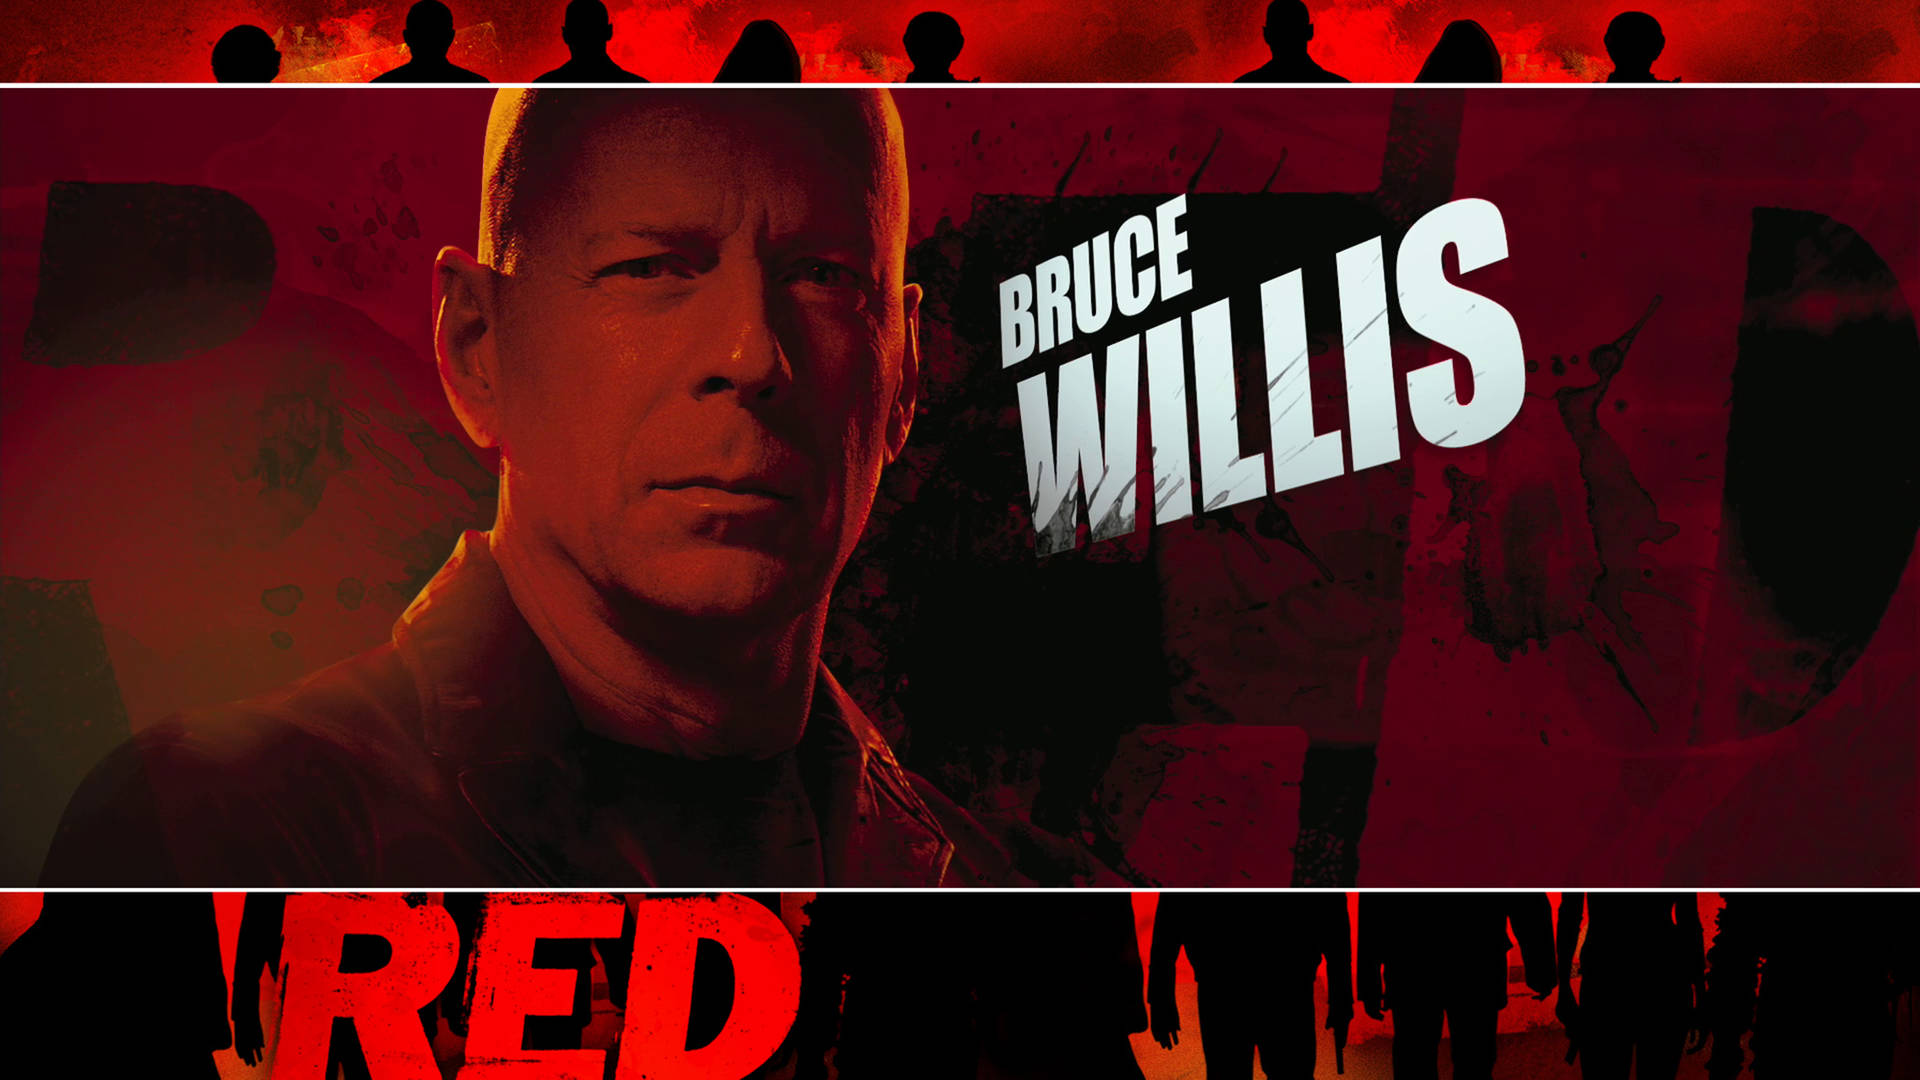 Bruce Willis Red Aesthetic